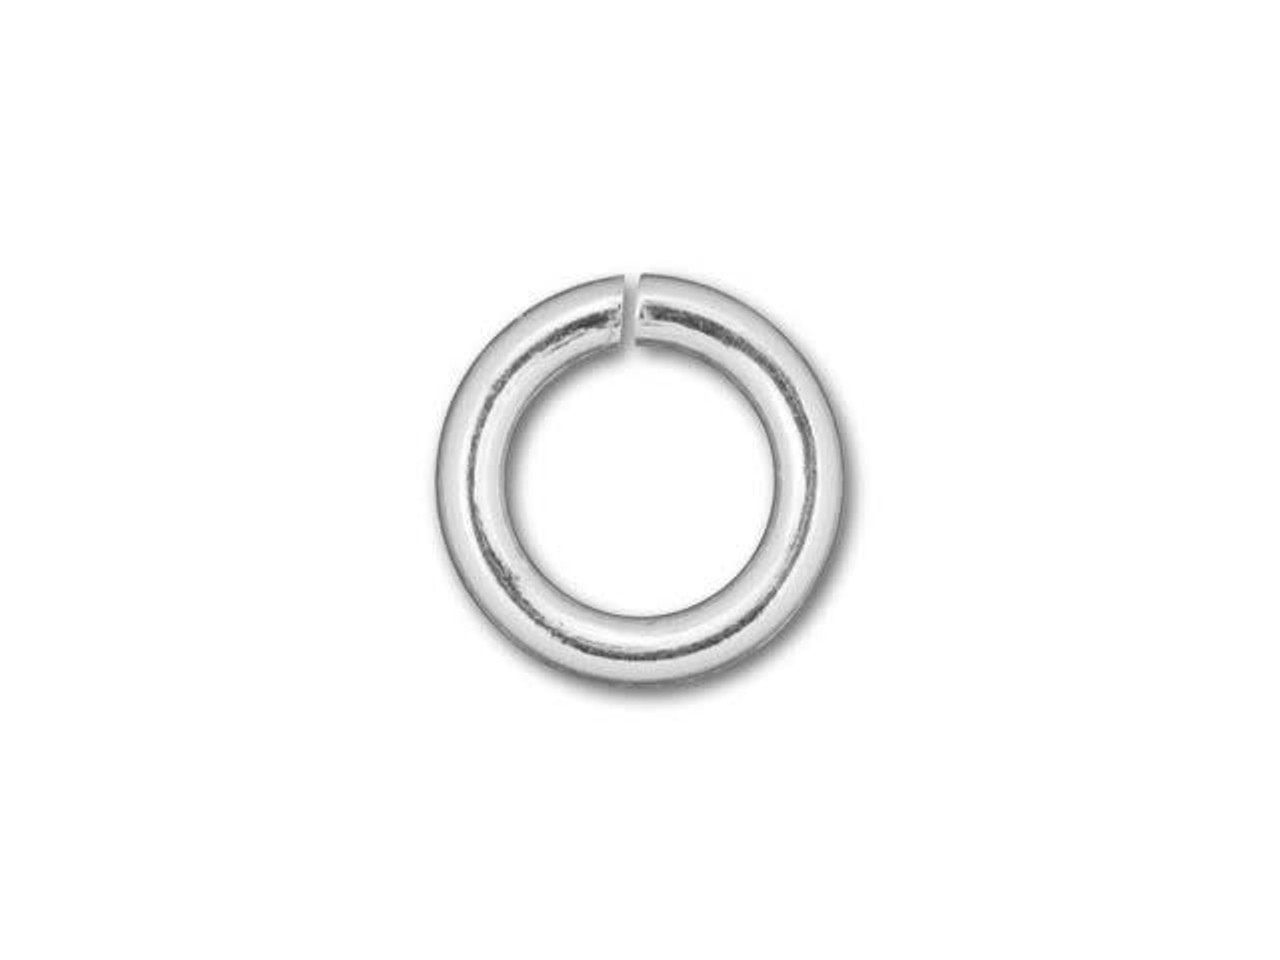 50 Jump Rings Open Sterling Silver Jewelry 19 Ga 6mm